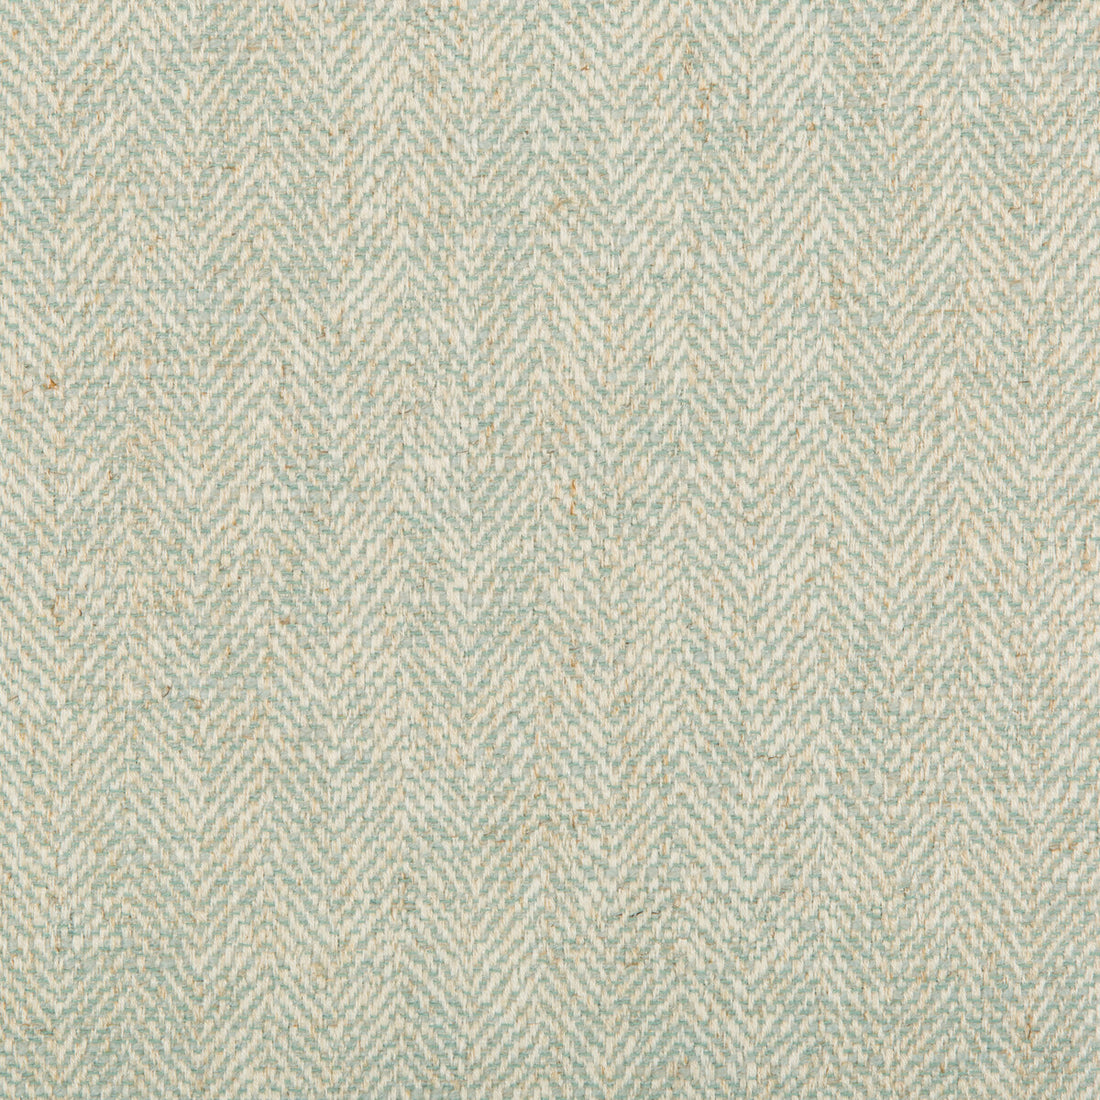 Kravet Smart fabric in 35228-35 color - pattern 35228.35.0 - by Kravet Smart in the Performance Kravetarmor collection